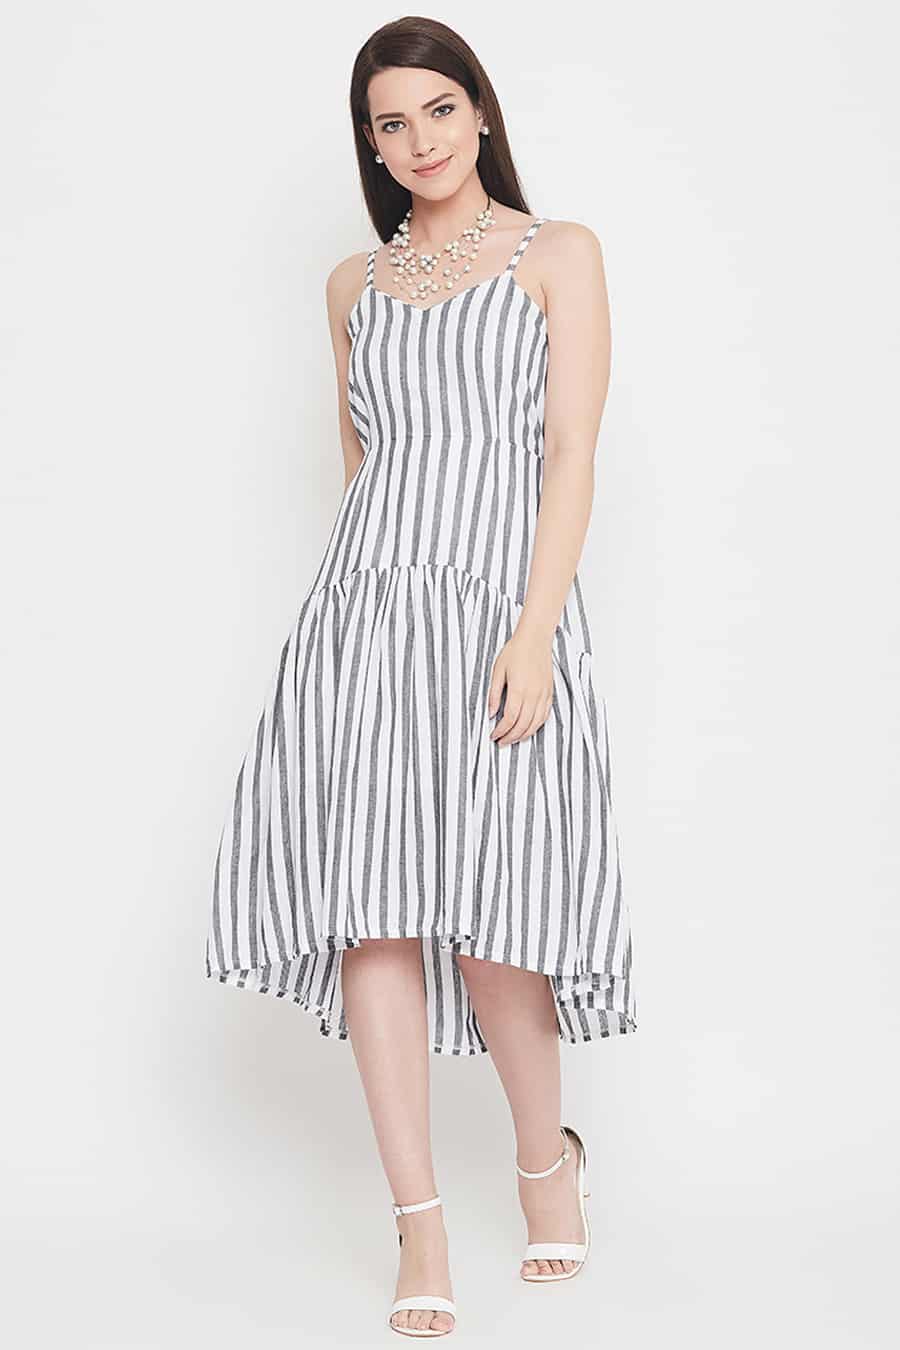 Grey and white stripe dress